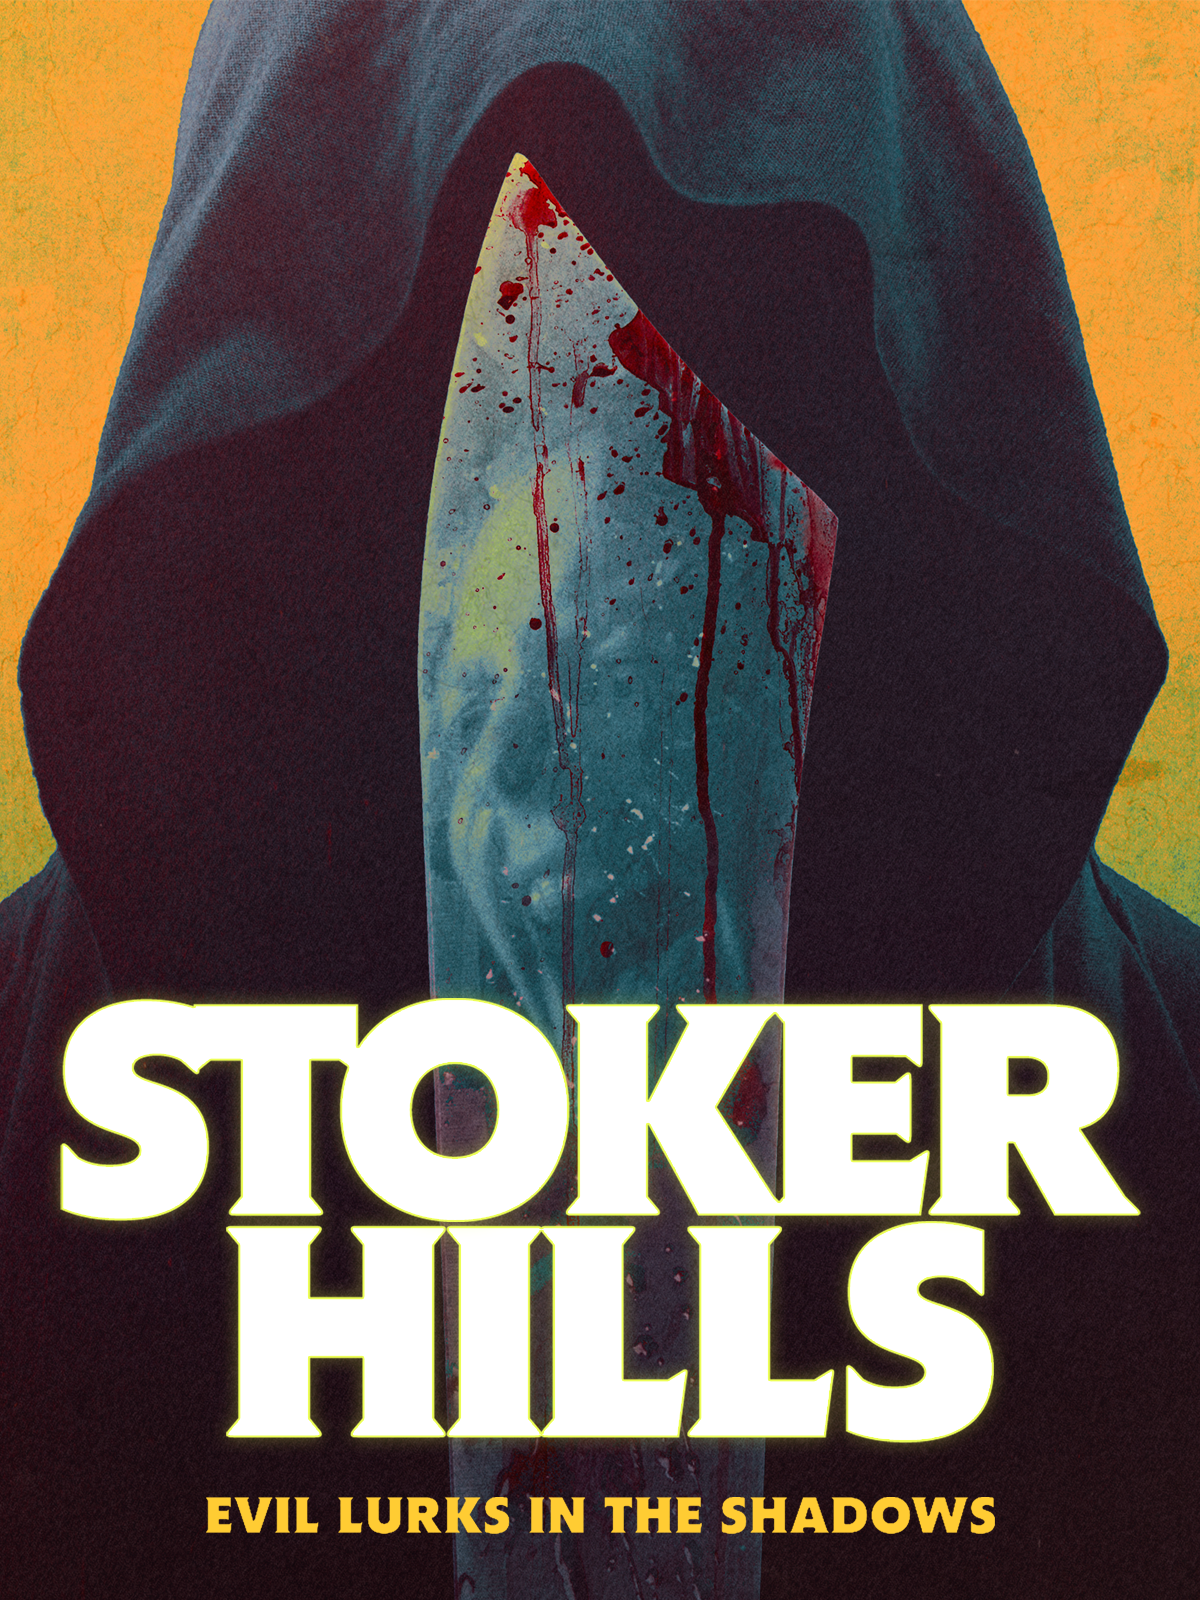 stoker_hills_amazon_3x4_cover_art_1200x1600